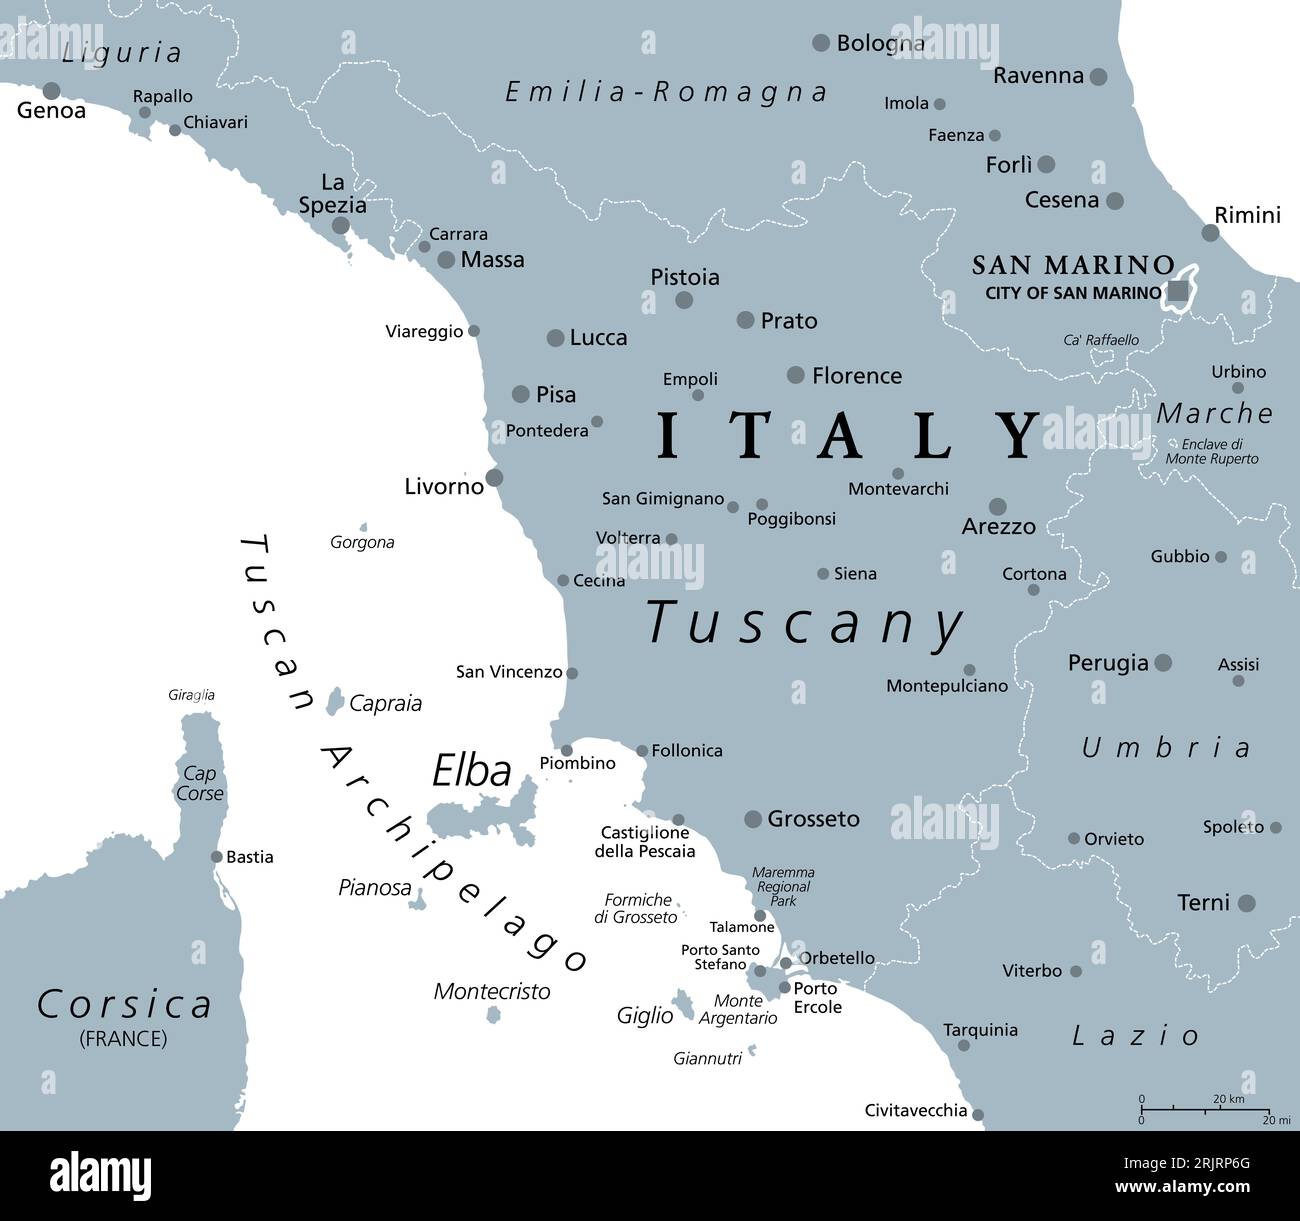 Tuscany, region in central Italy, gray political map with popular tourist spots like Florence, Castiglione della Pescaia, Pisa, Lucca, Grosseto, etc. Stock Photo